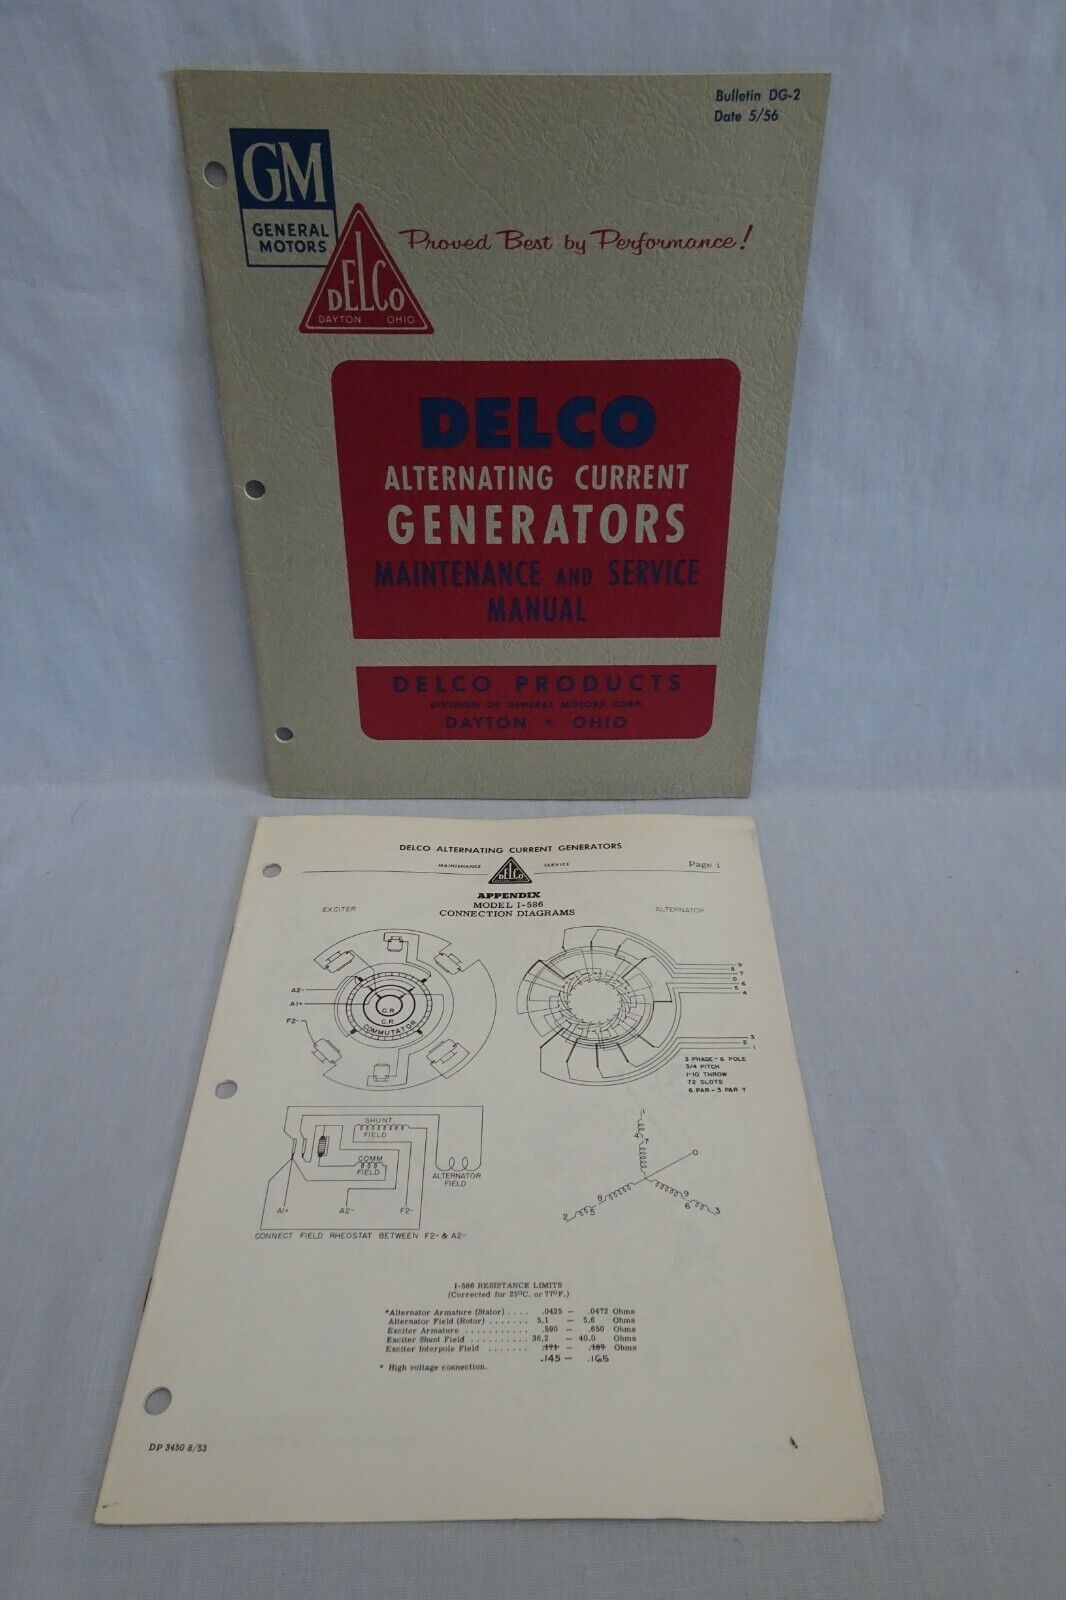 2 Gm General Motors Delco Dayton Ohio Generators Maintenance Service Manual